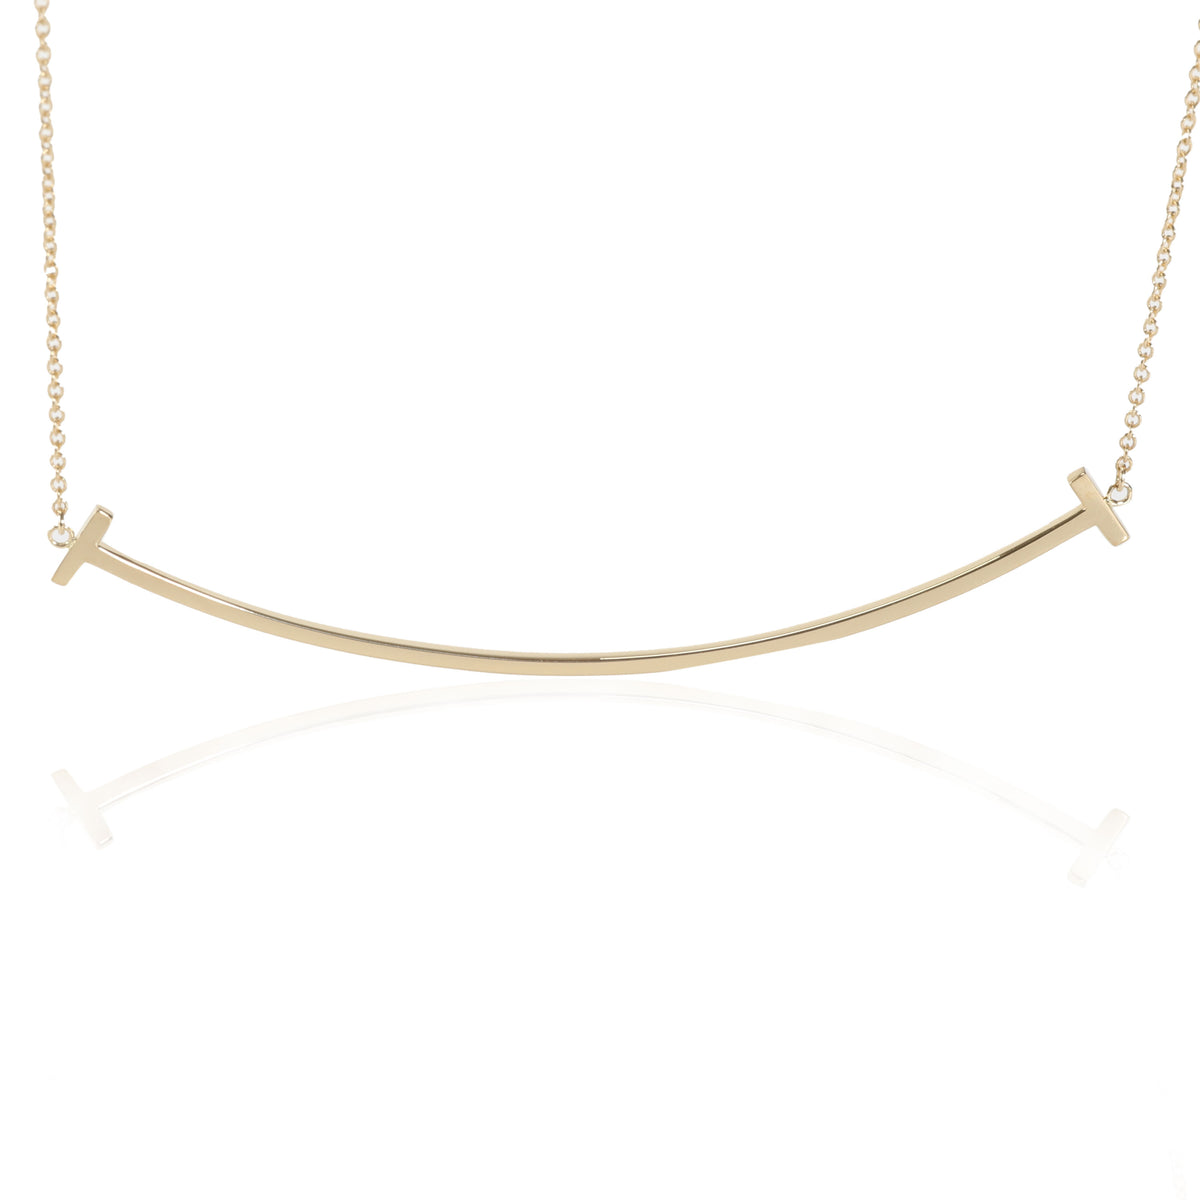 Tiffany T medium smile pendant in 18k gold with diamonds.